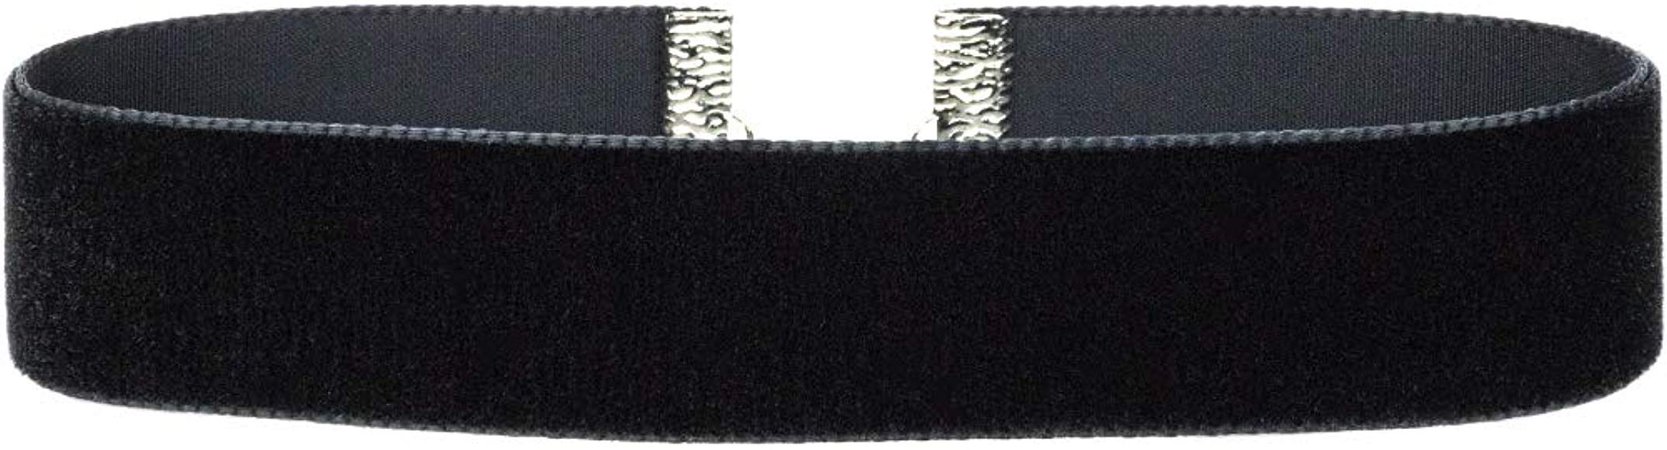 Amazon.com: Twilight's Fancy 7/8" (22mm) Plain Velvet Choker Necklace (Small, Black): Arts, Crafts & Sewing